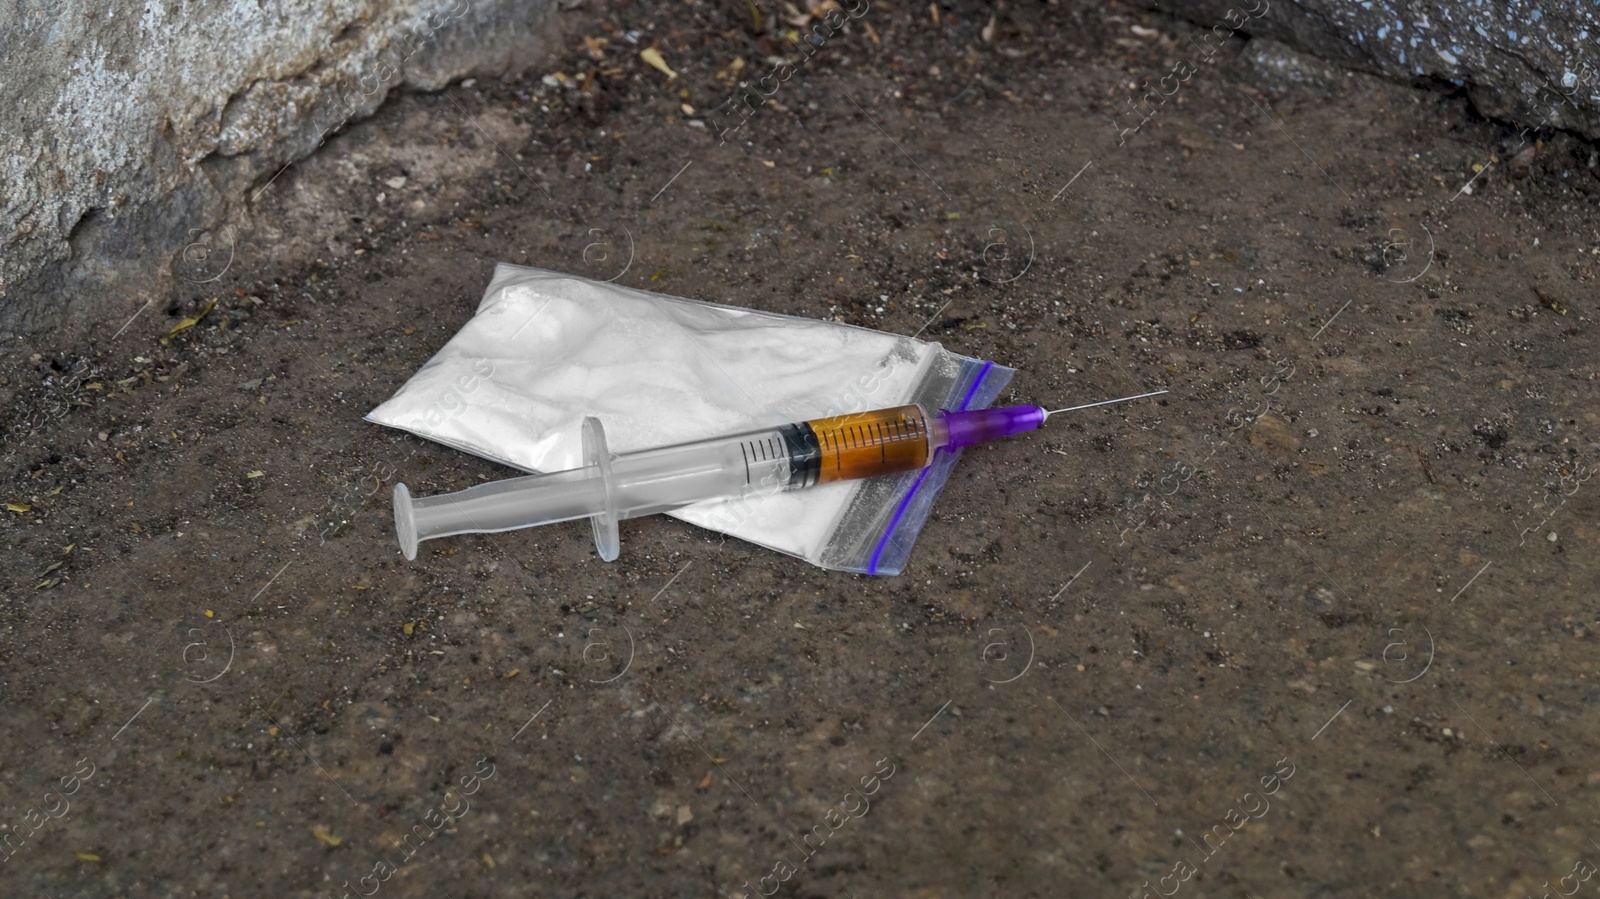 Photo of Plastic bag with powder and syringe on asphalt outdoors. Hard drugs